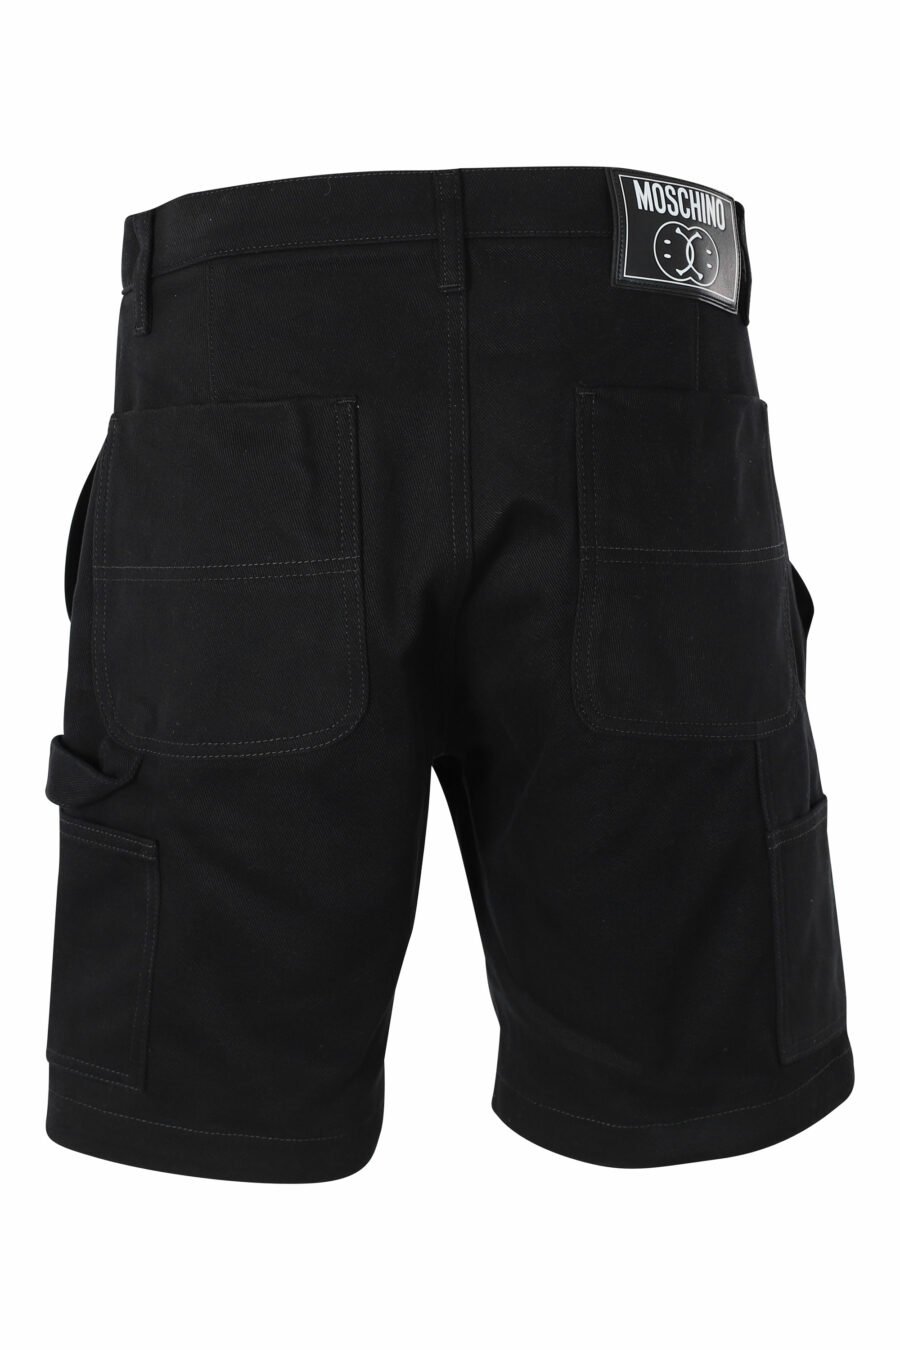 Short en denim noir avec poches latérales - IMG 9567